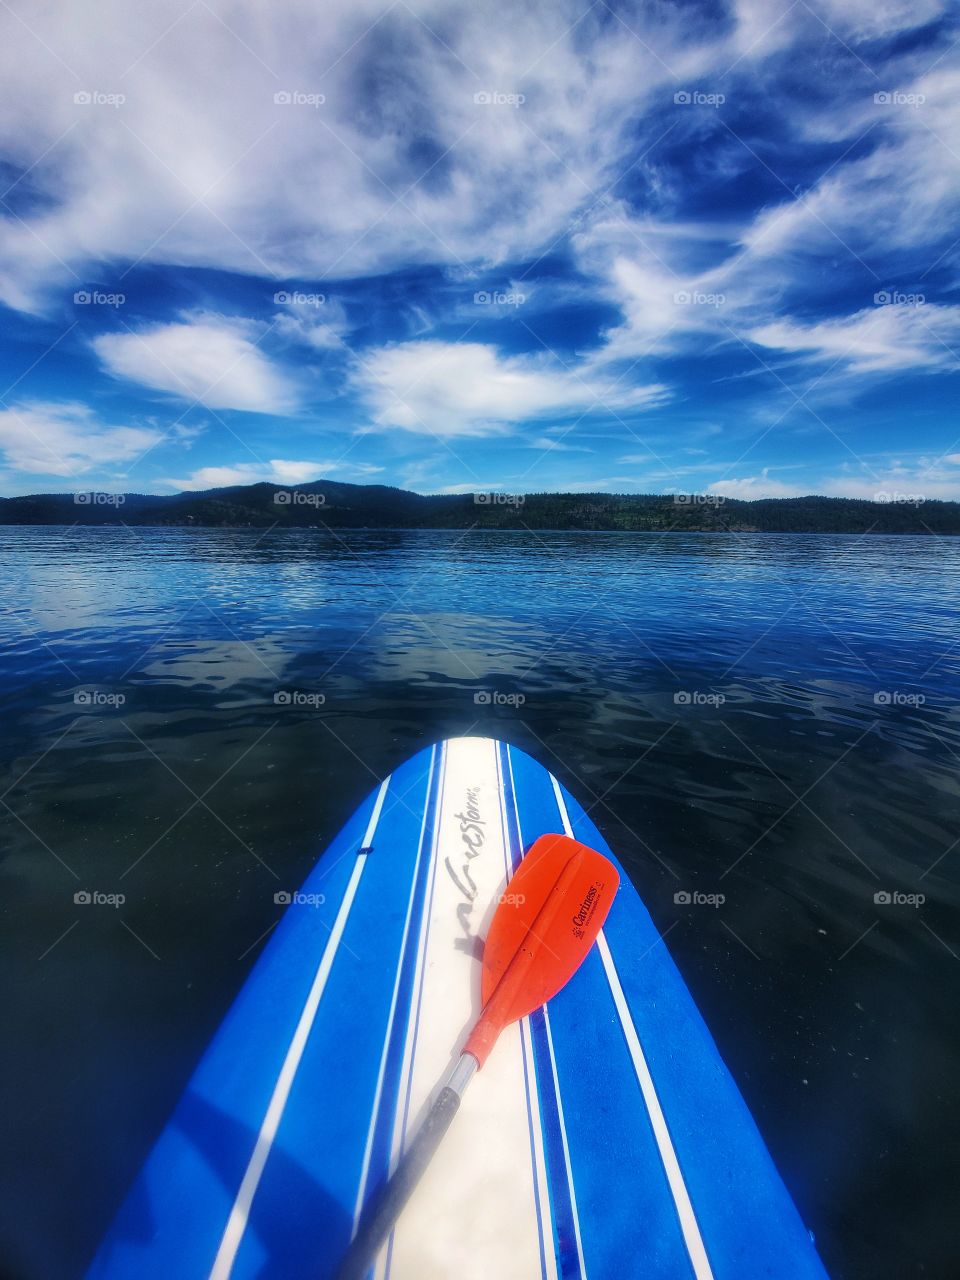 Paddle Boarding on the lake in Coeur d'alene Idaho